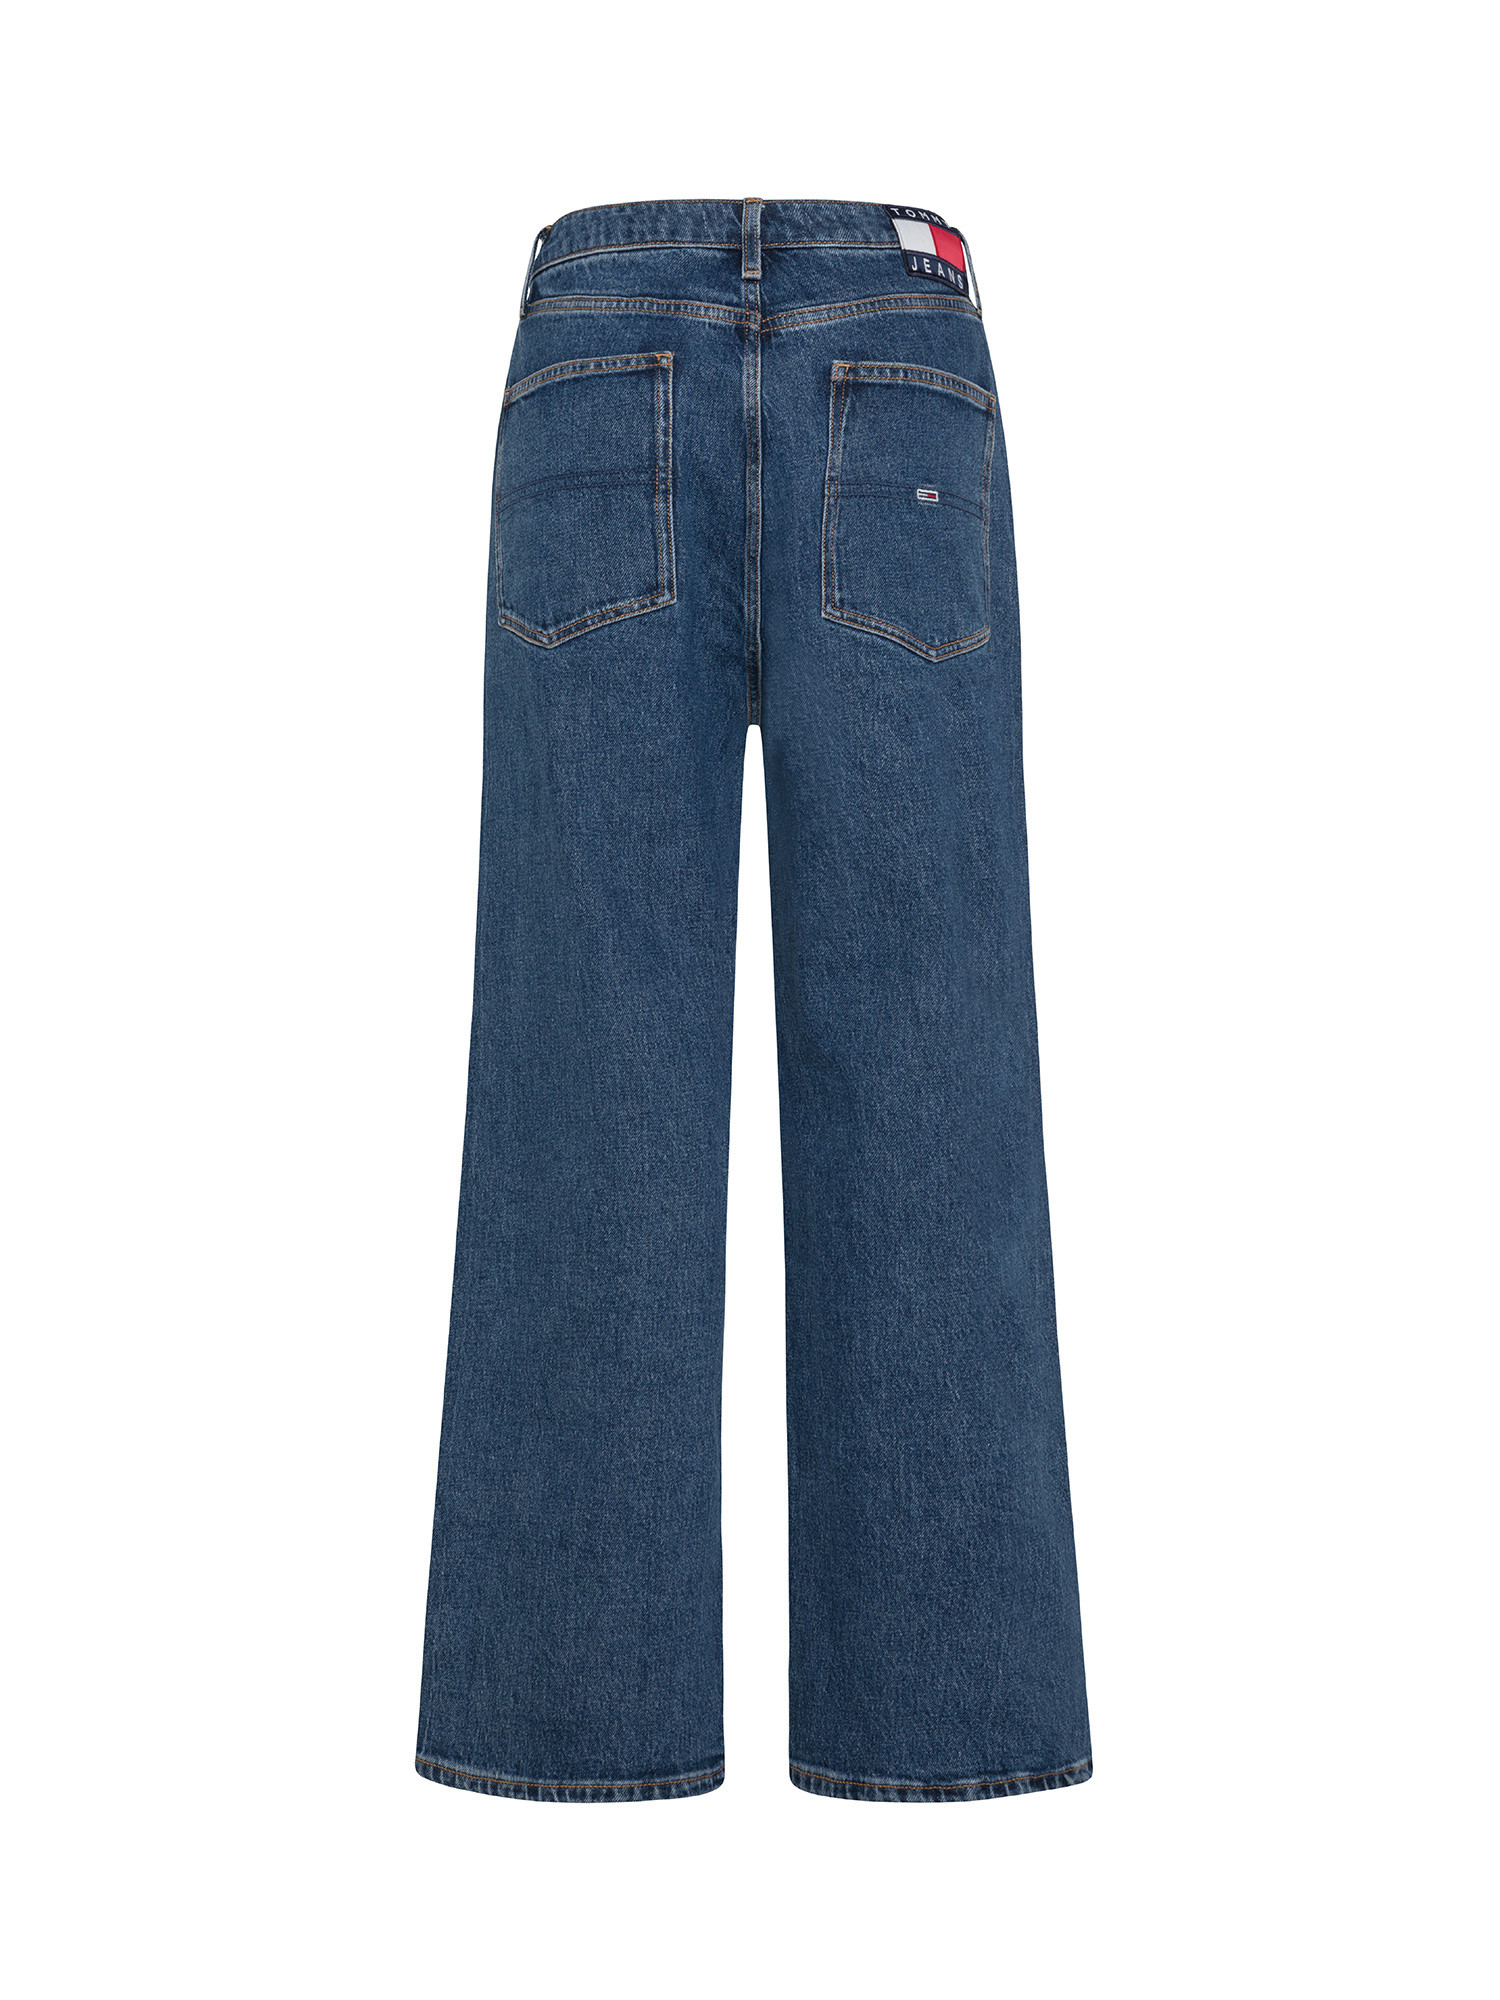 Tommy Jeans - Jeans baggy a vita bassa, Denim, large image number 1